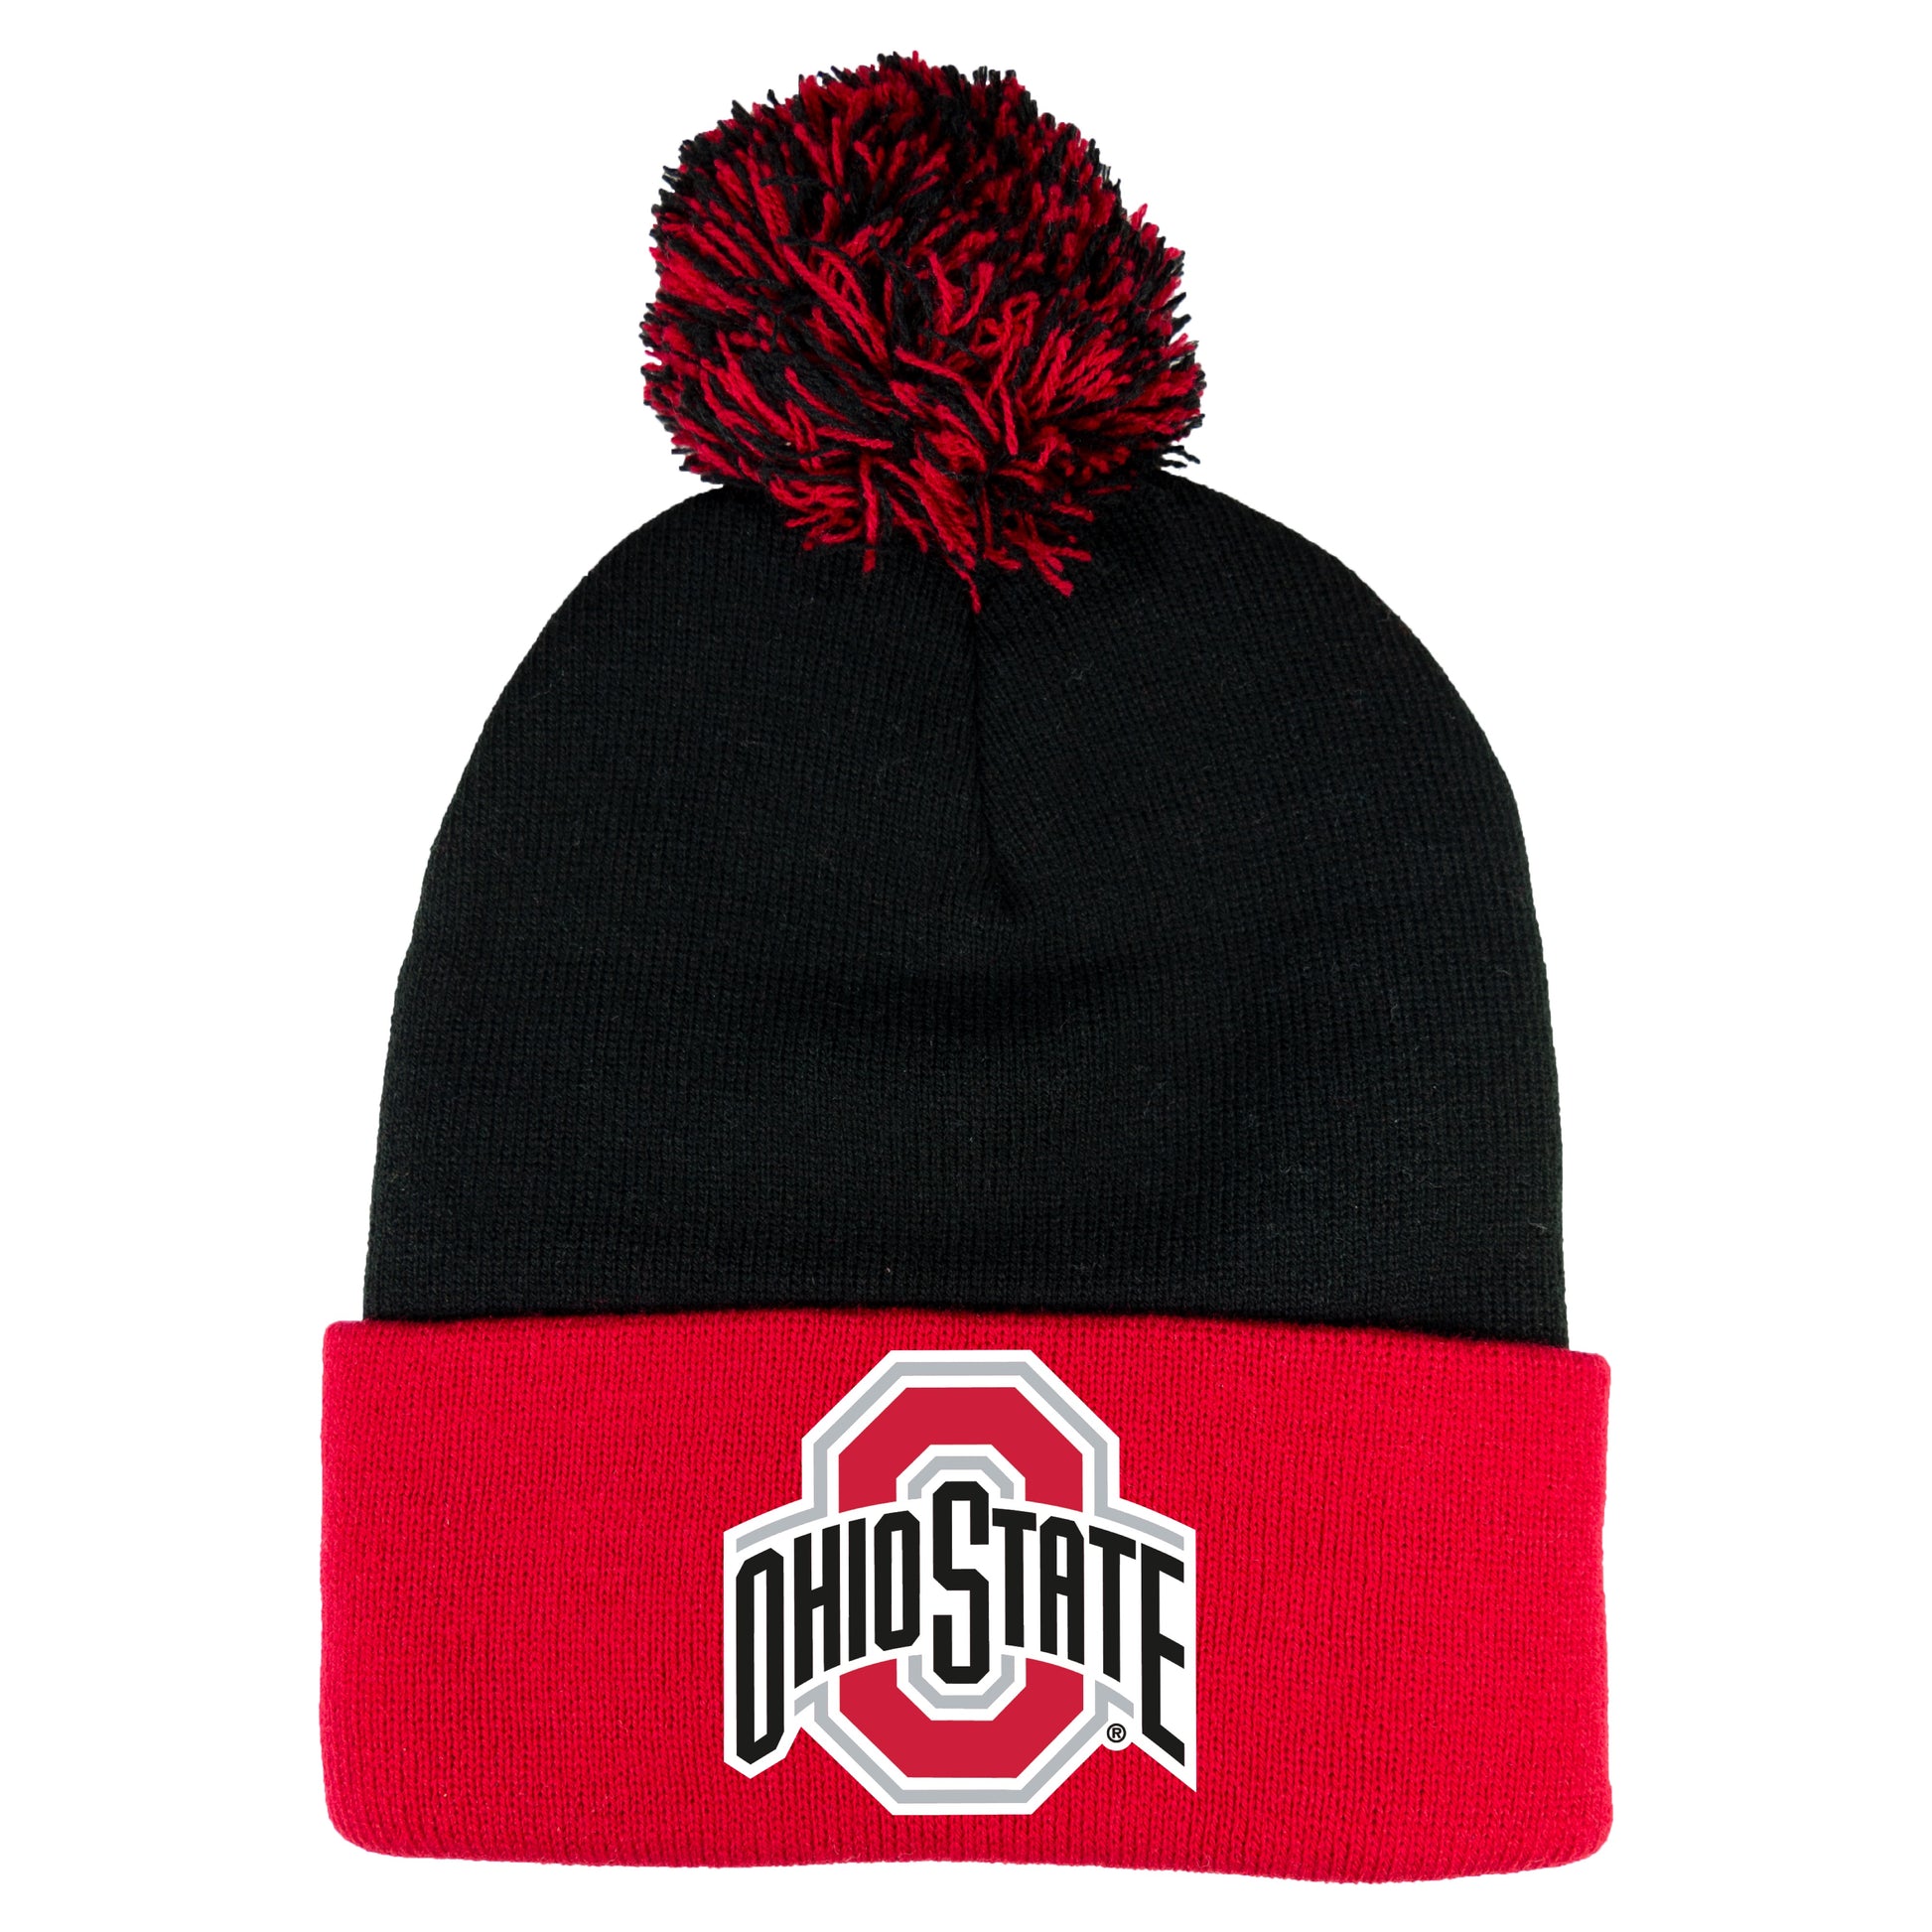 Ohio State Buckeyes 3D 12 in Knit Pom-Pom Top Beanie- Black/ Red - Ten Gallon Hat Co.